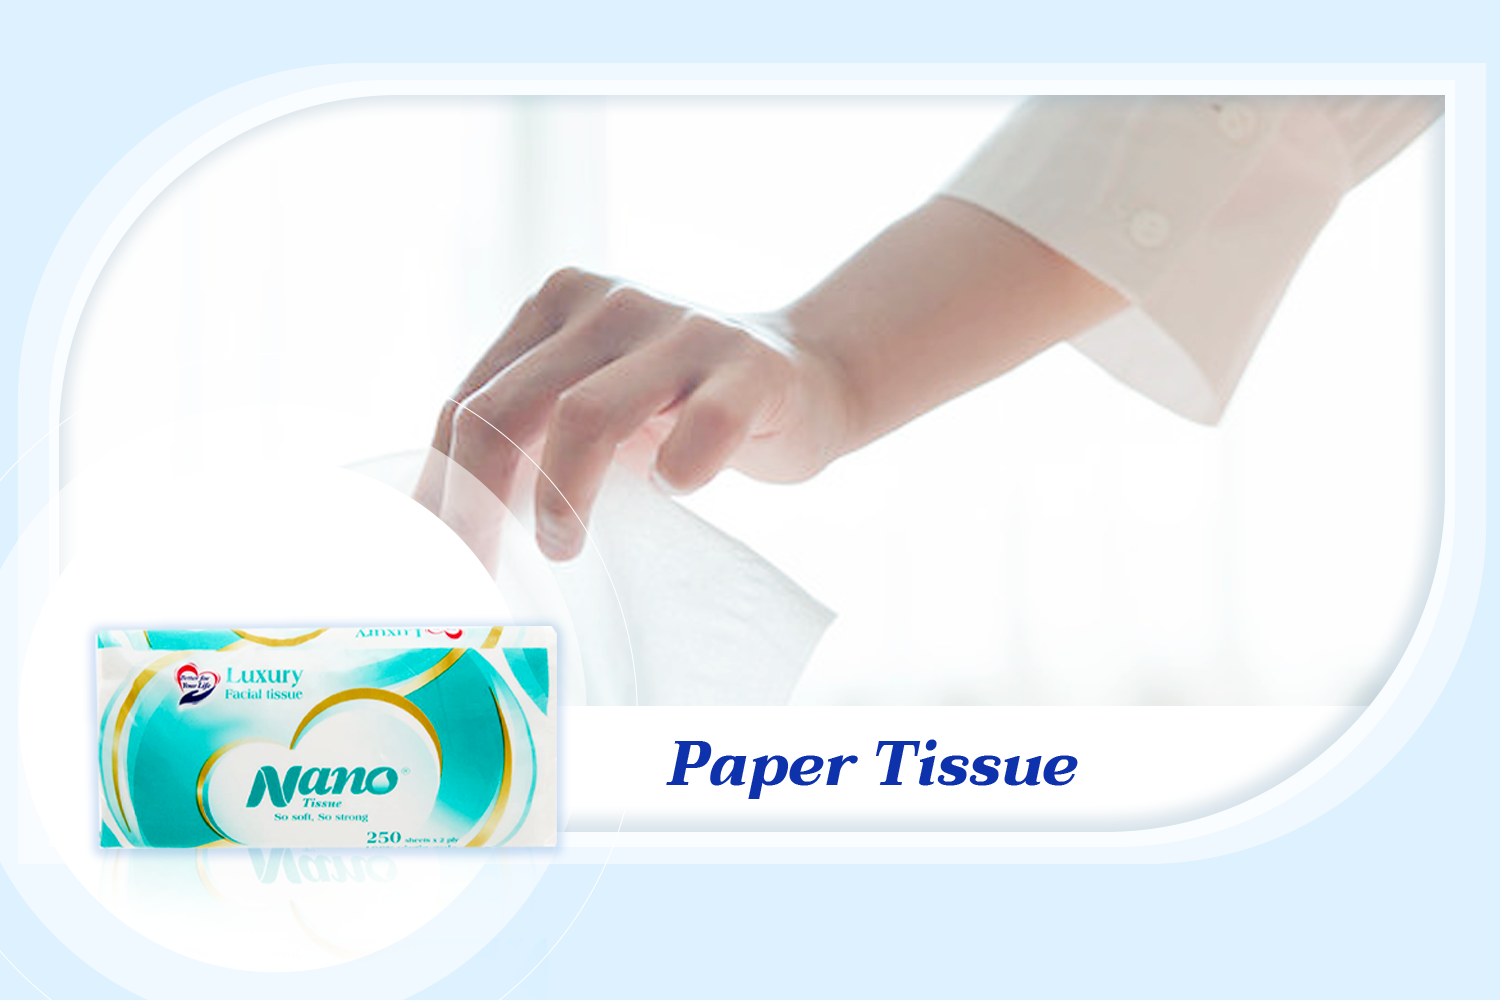 Paper tissue